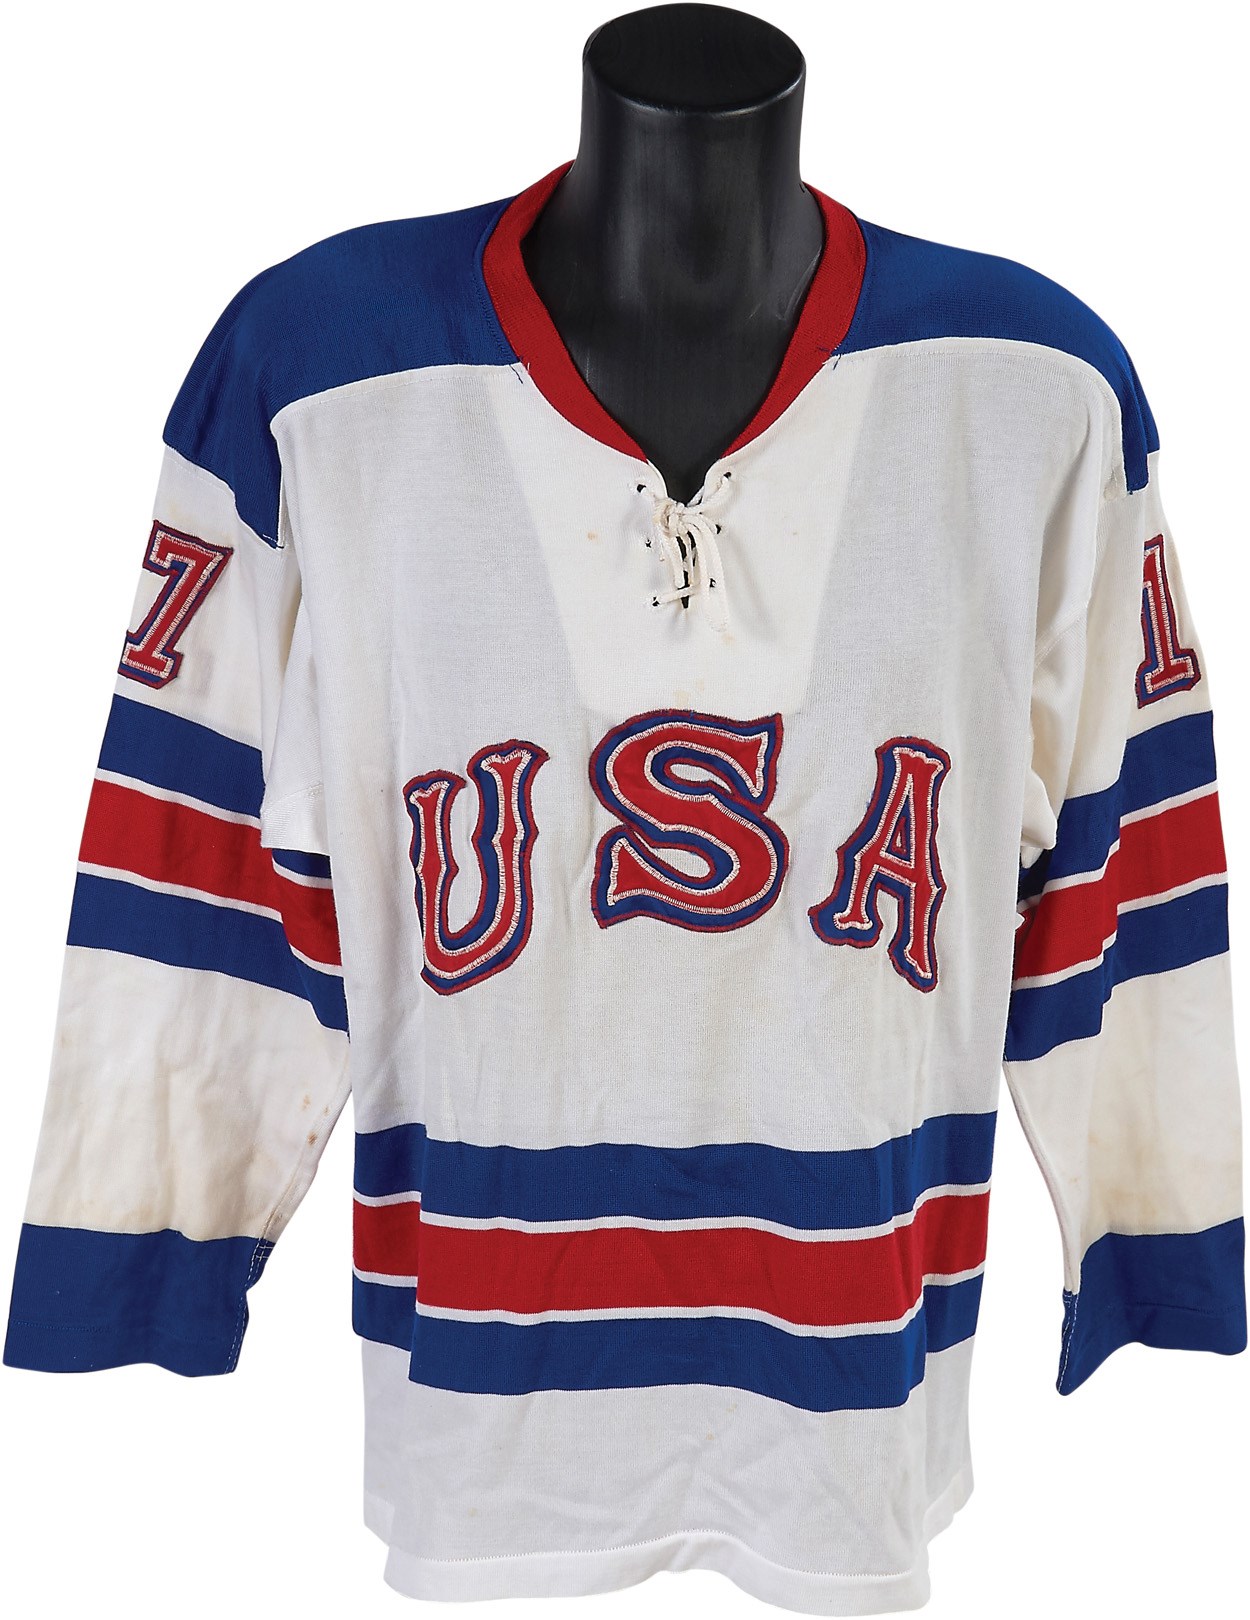 The Craig Patrick Hockey Collection - 1970 Craig Patrick Team USA World Championship Jersey